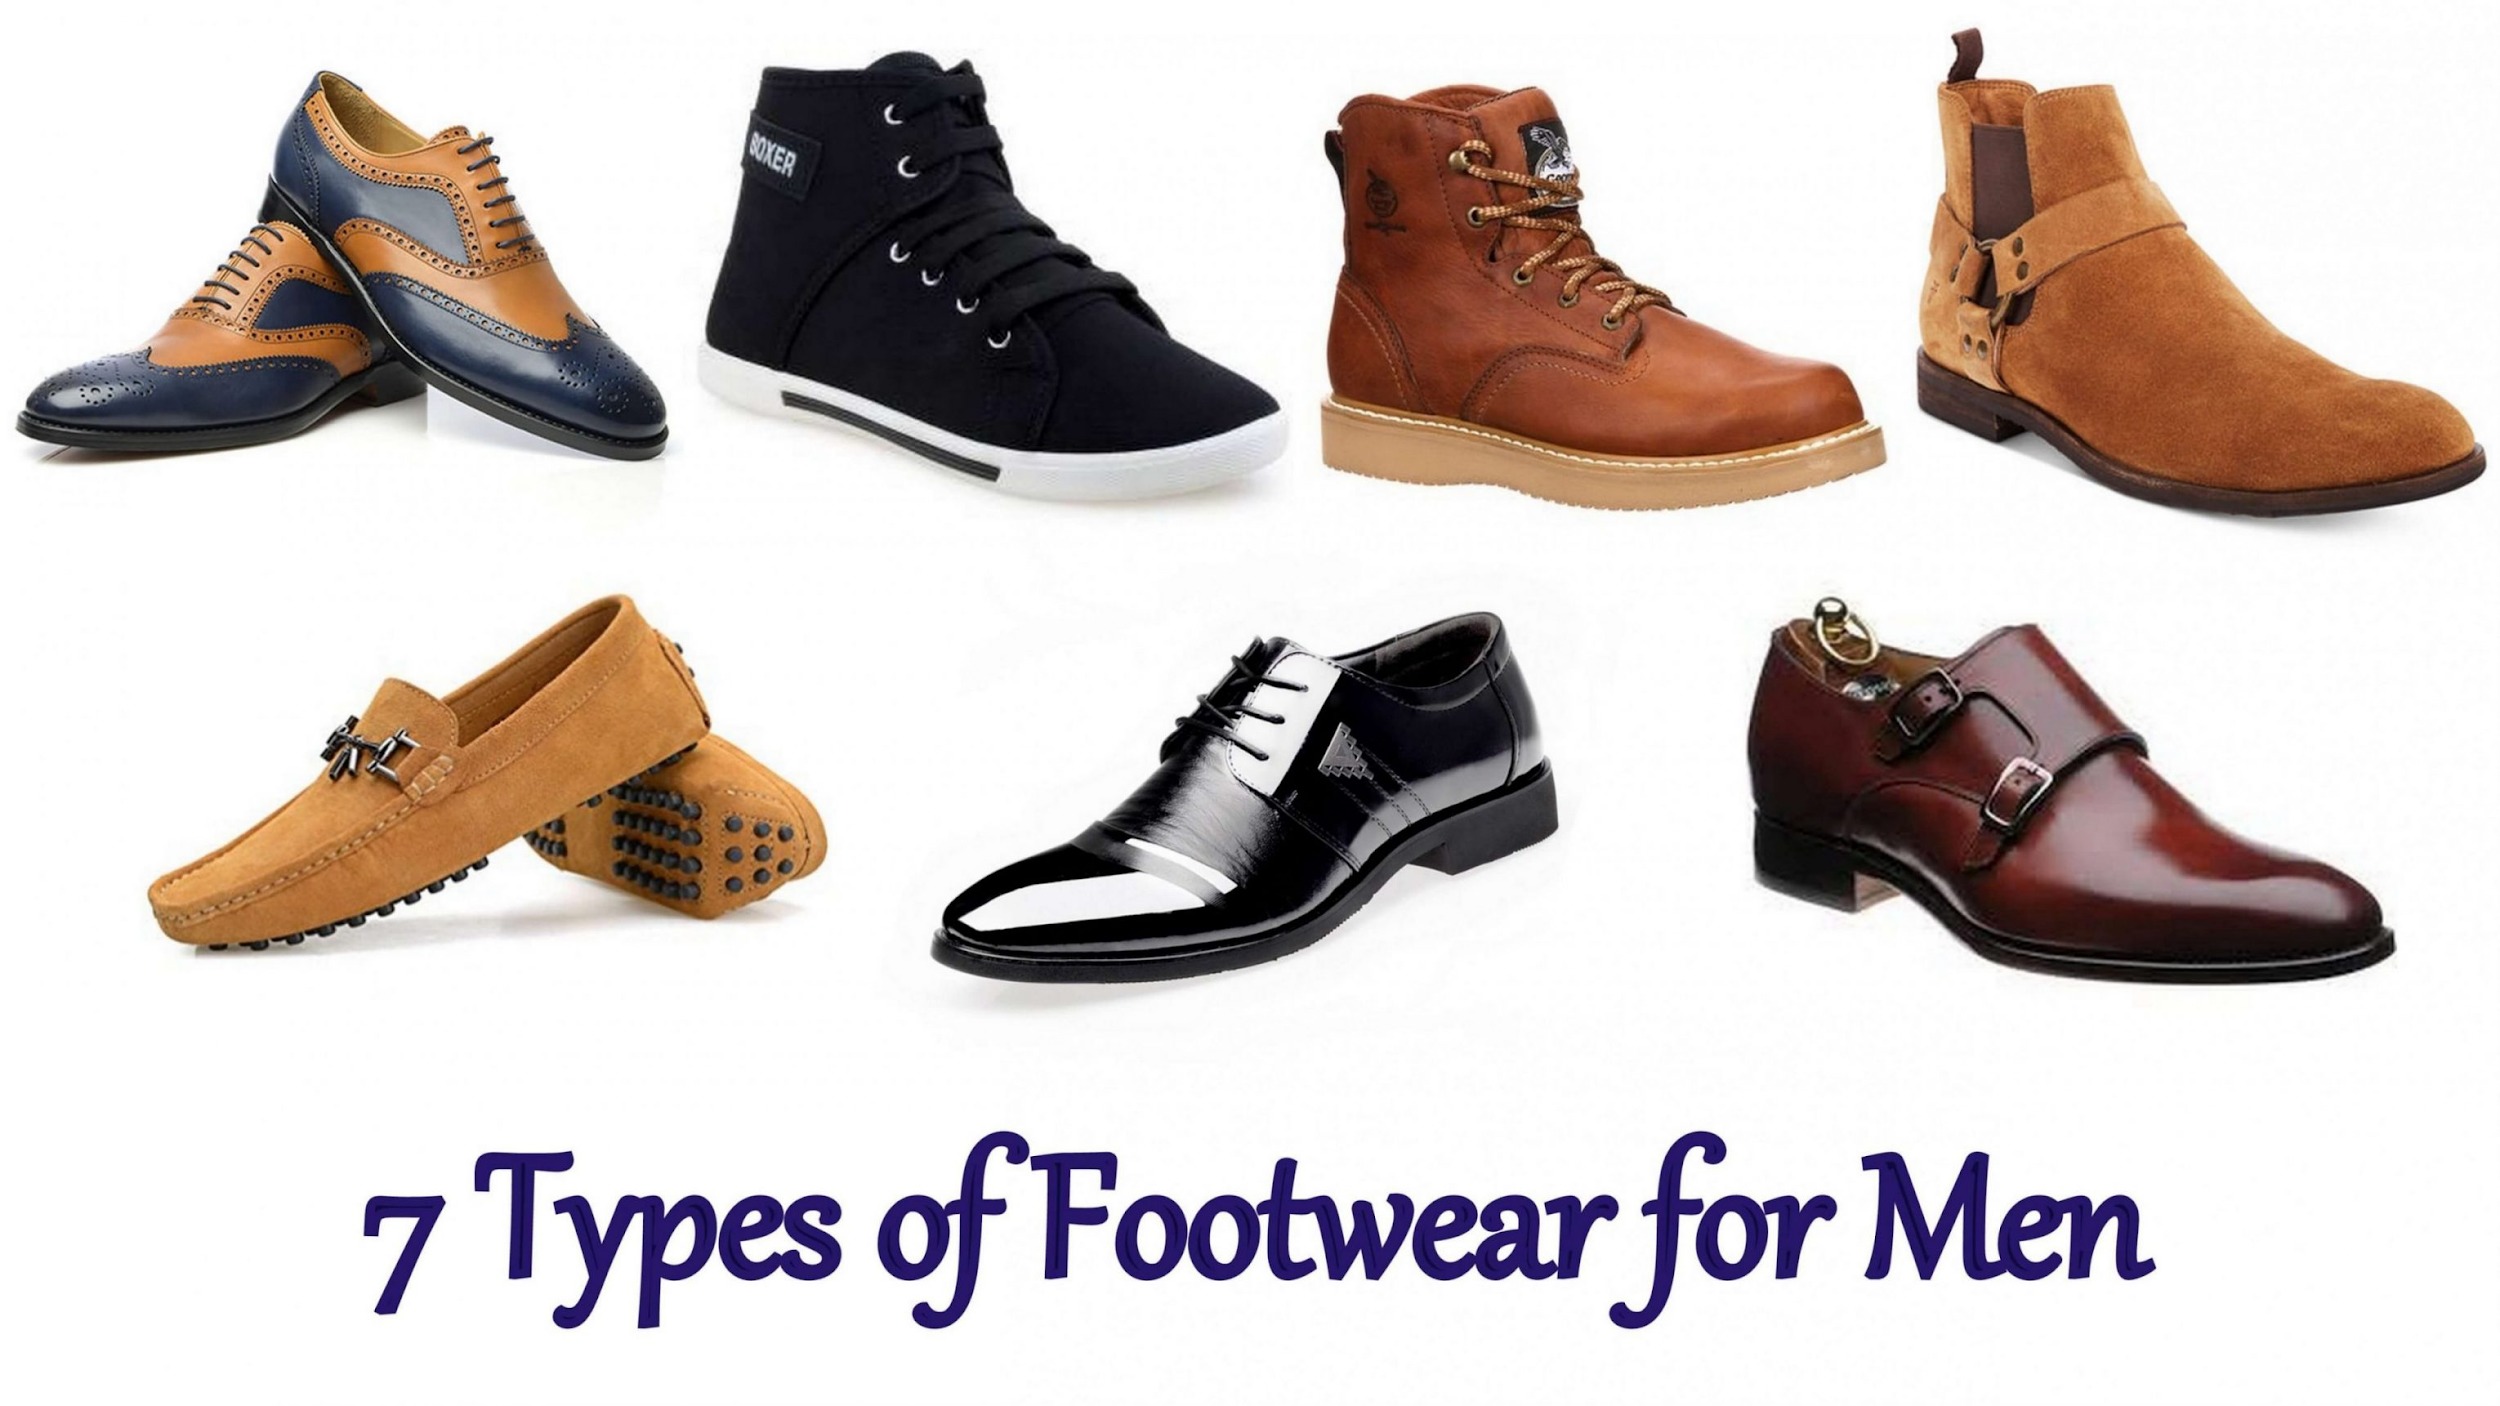 7 Types of Footwear for Men